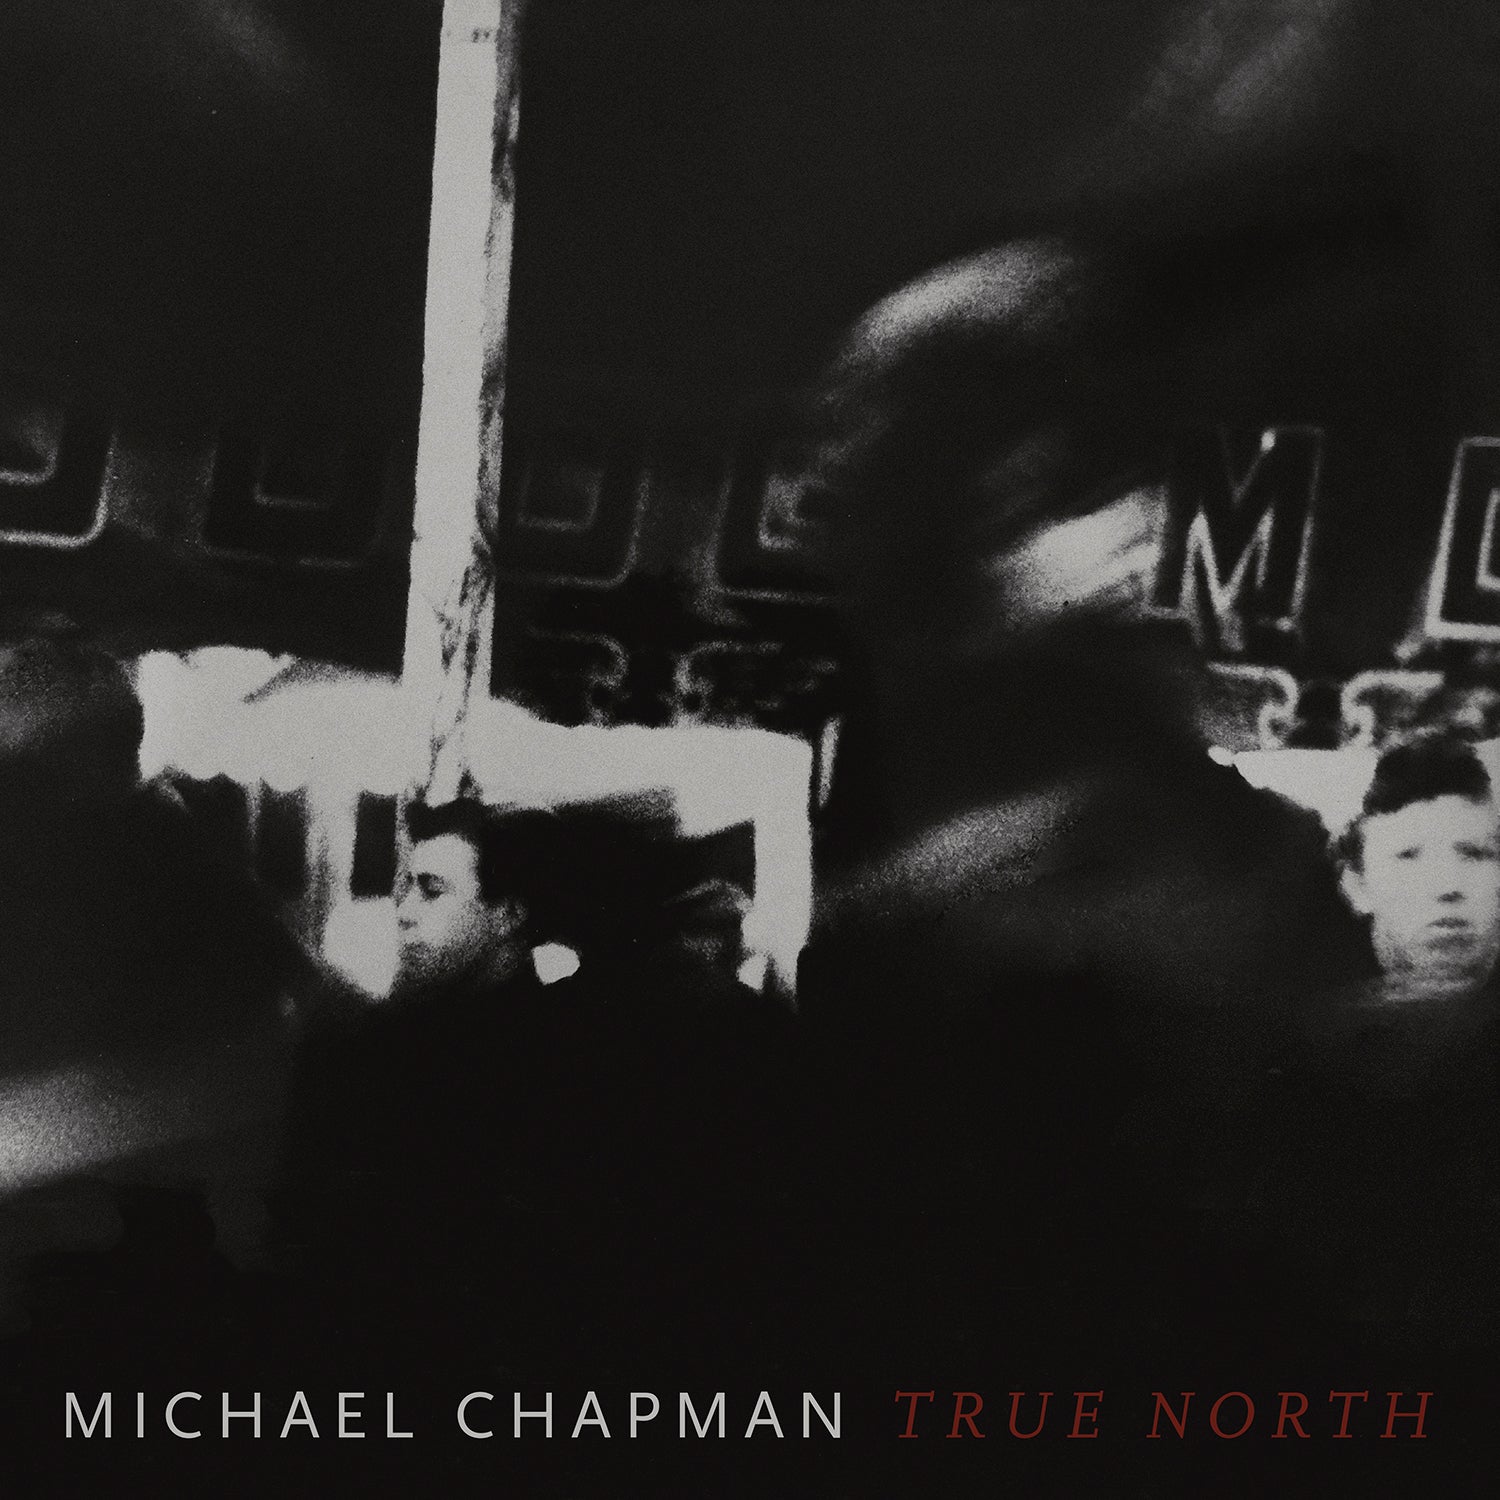 MICHAEL CHAPMAN "TRUE NORTH"